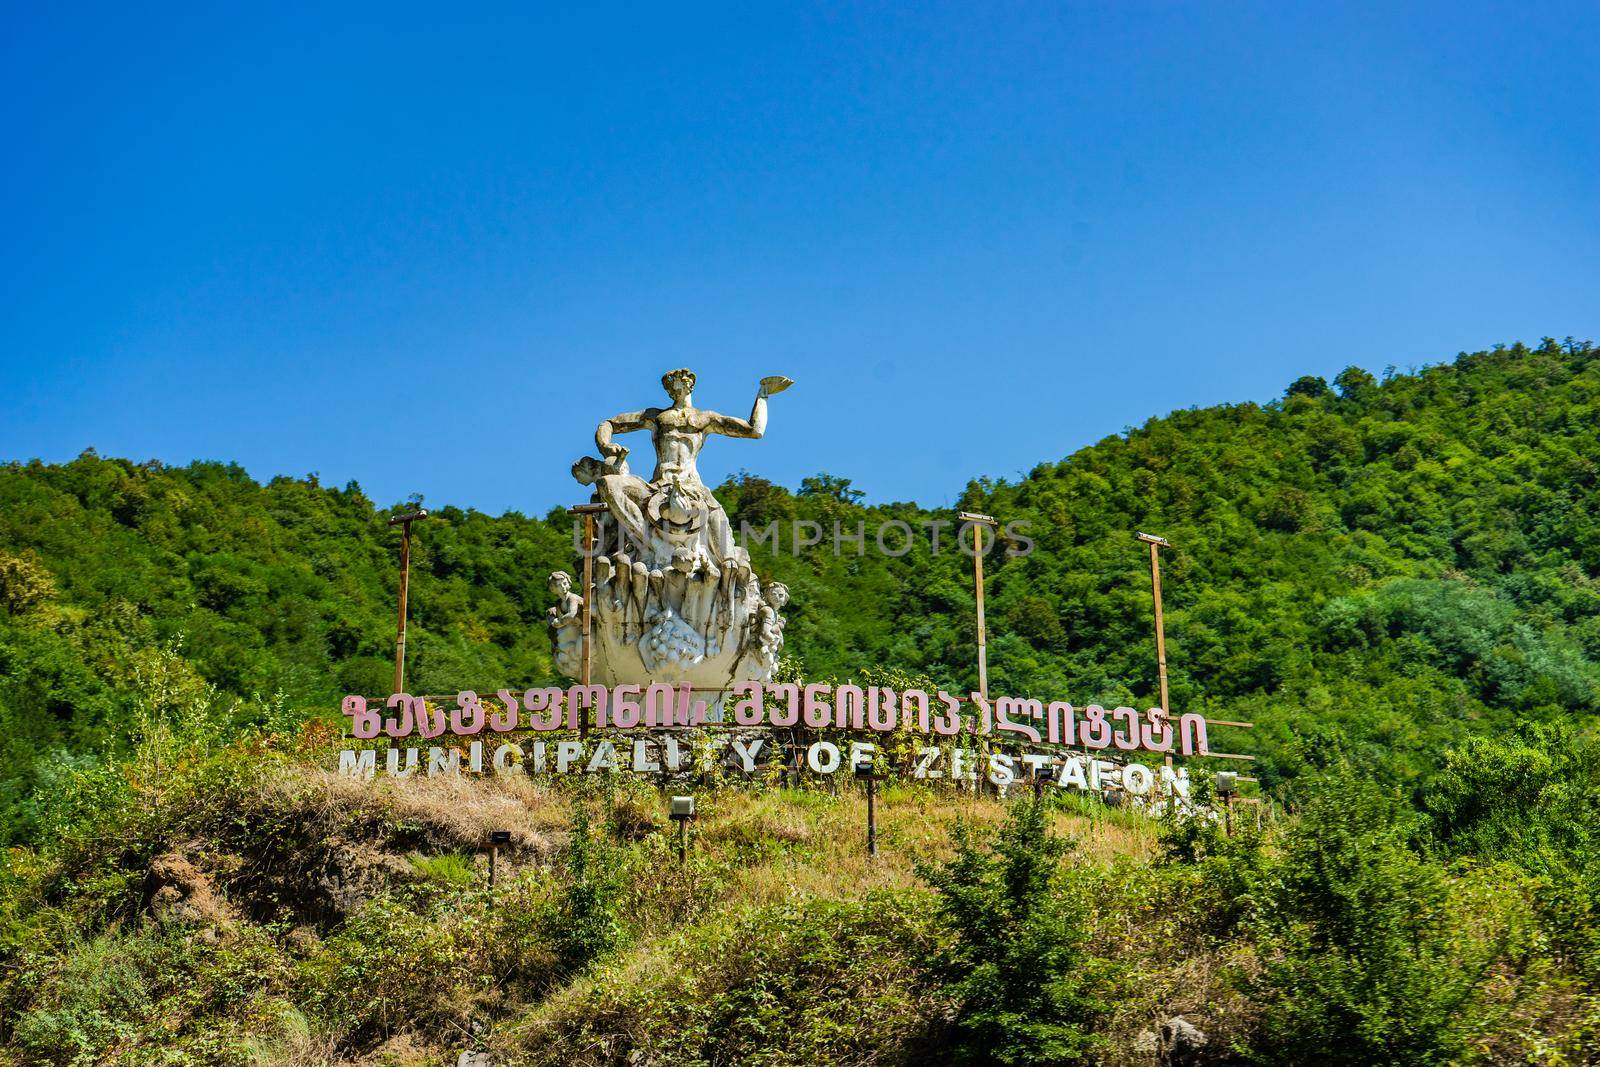 Monument in Caucasus mountain entering in Zestafoni municipality